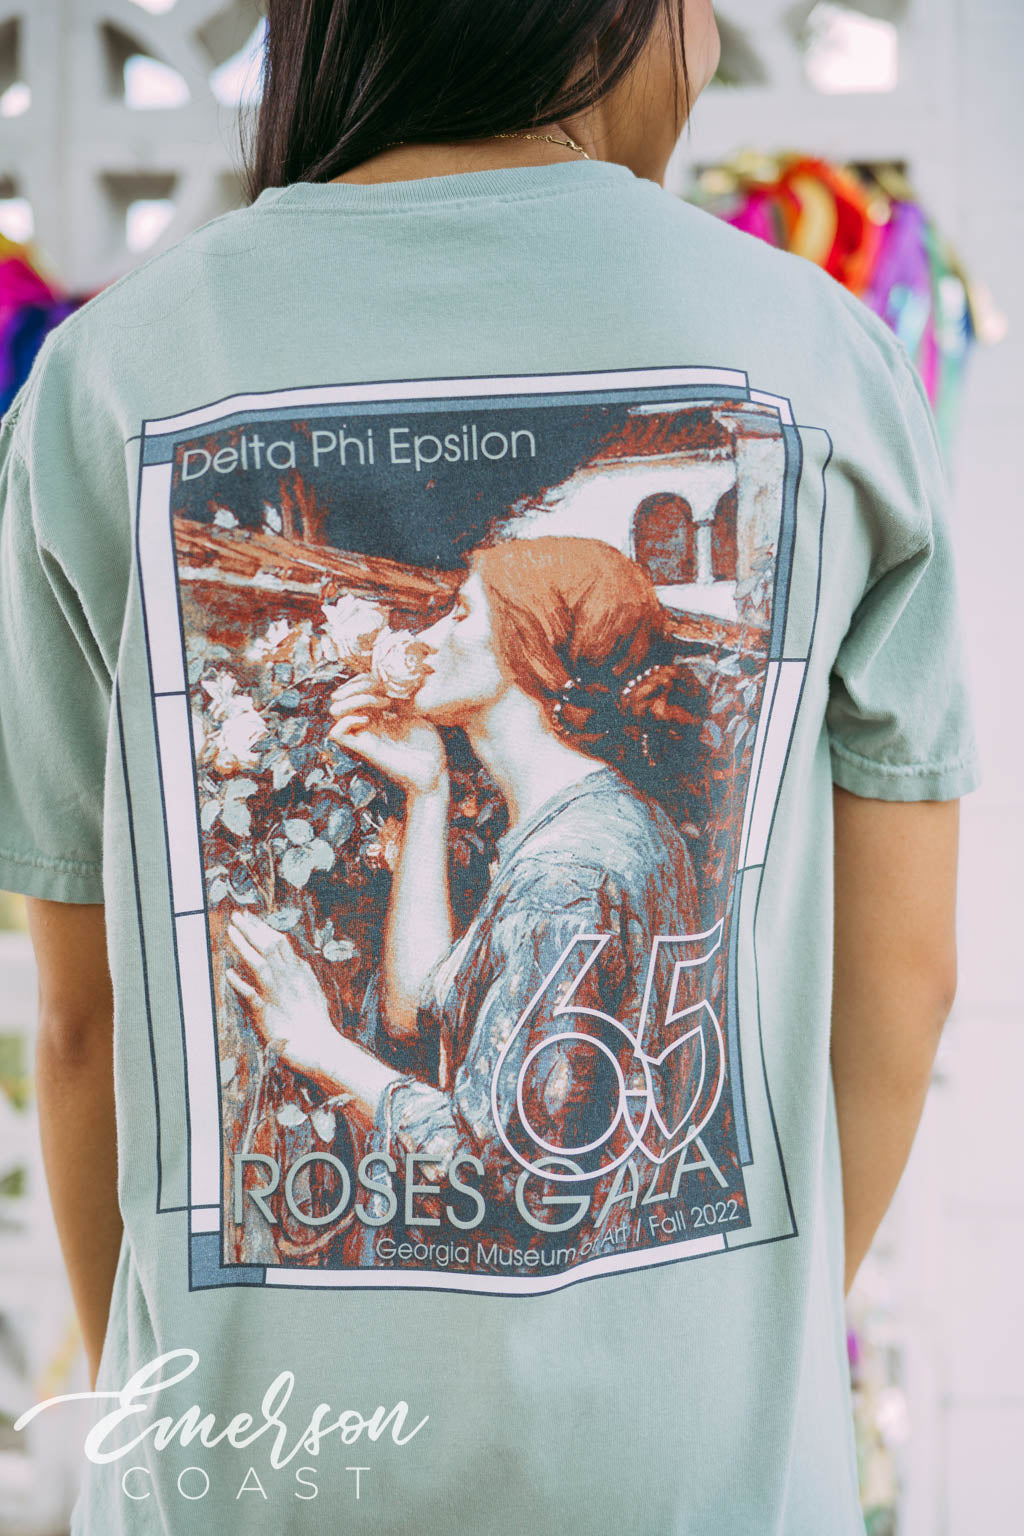 Delta Phi Epsilon 65 Roses Gala Tshirt